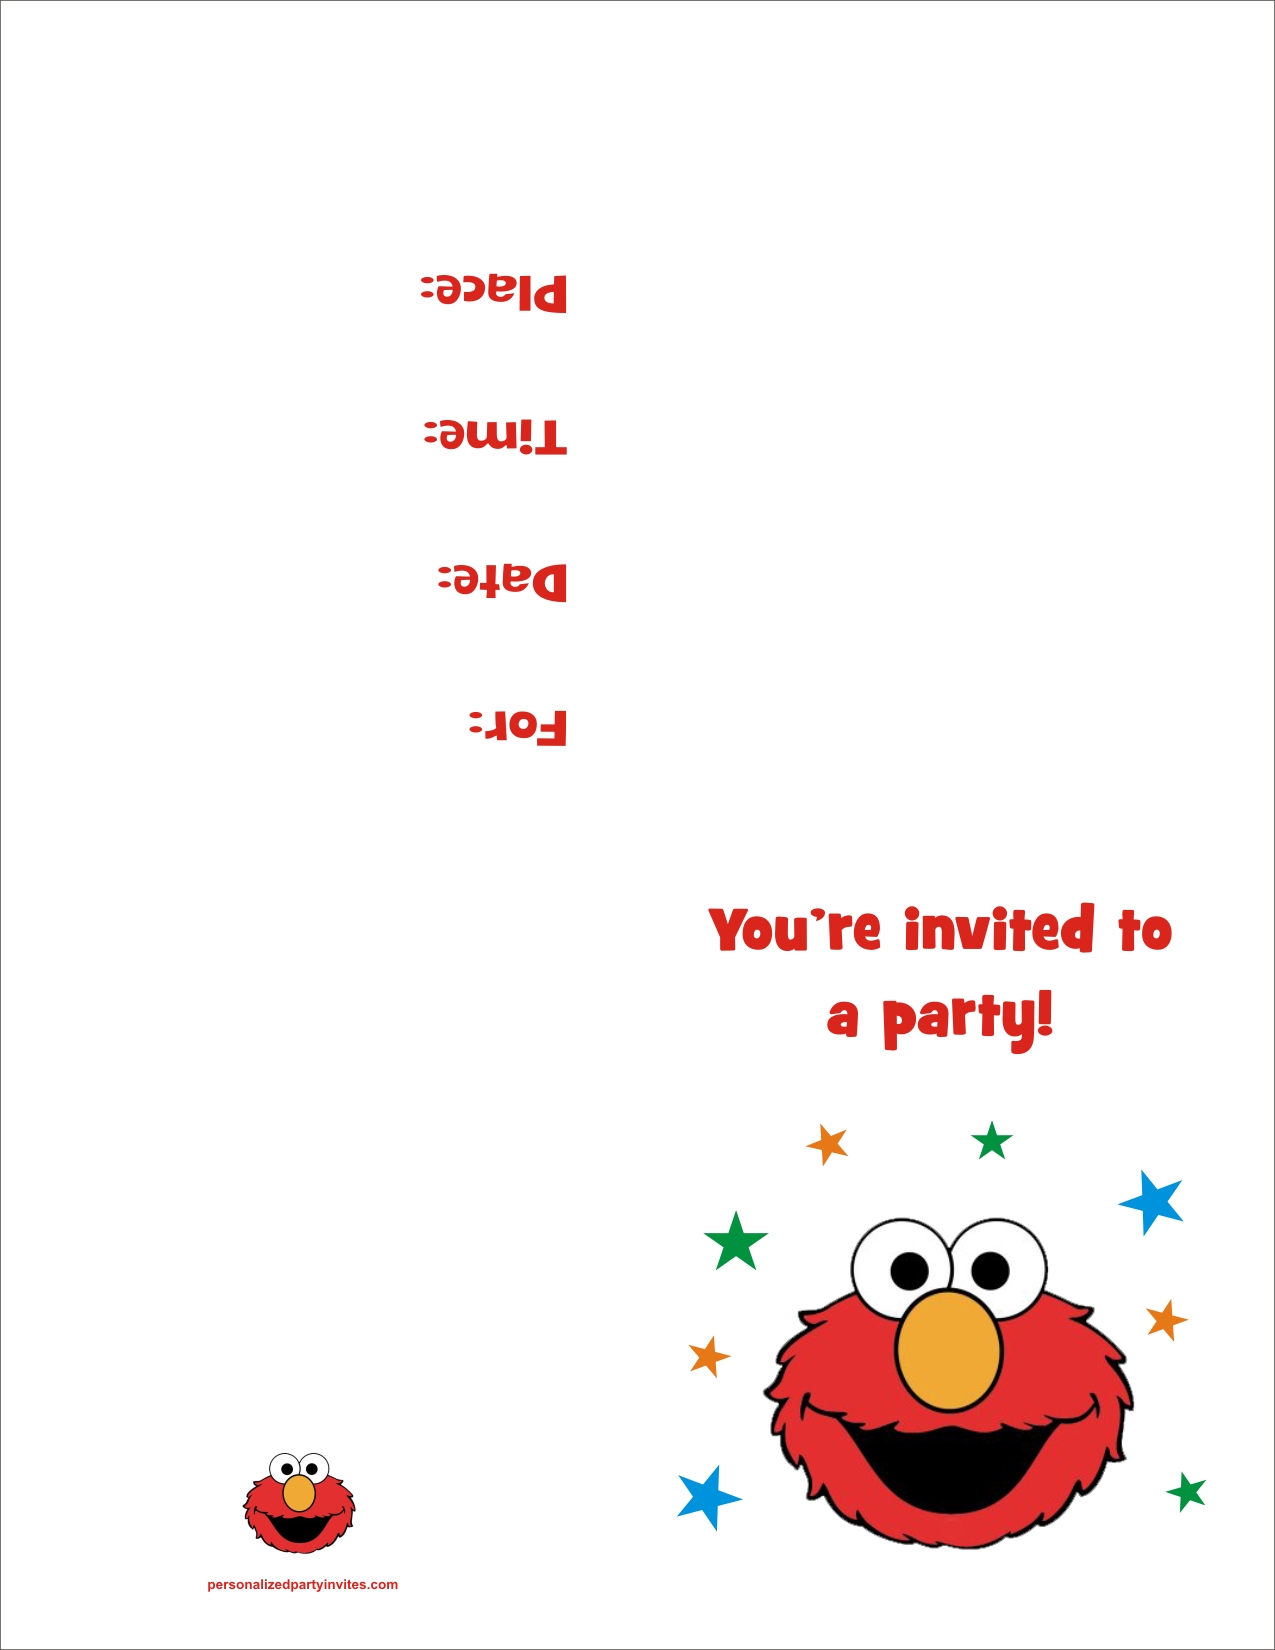 Elmo Free Printable Birthday Party Invitation Personalized Party Invites